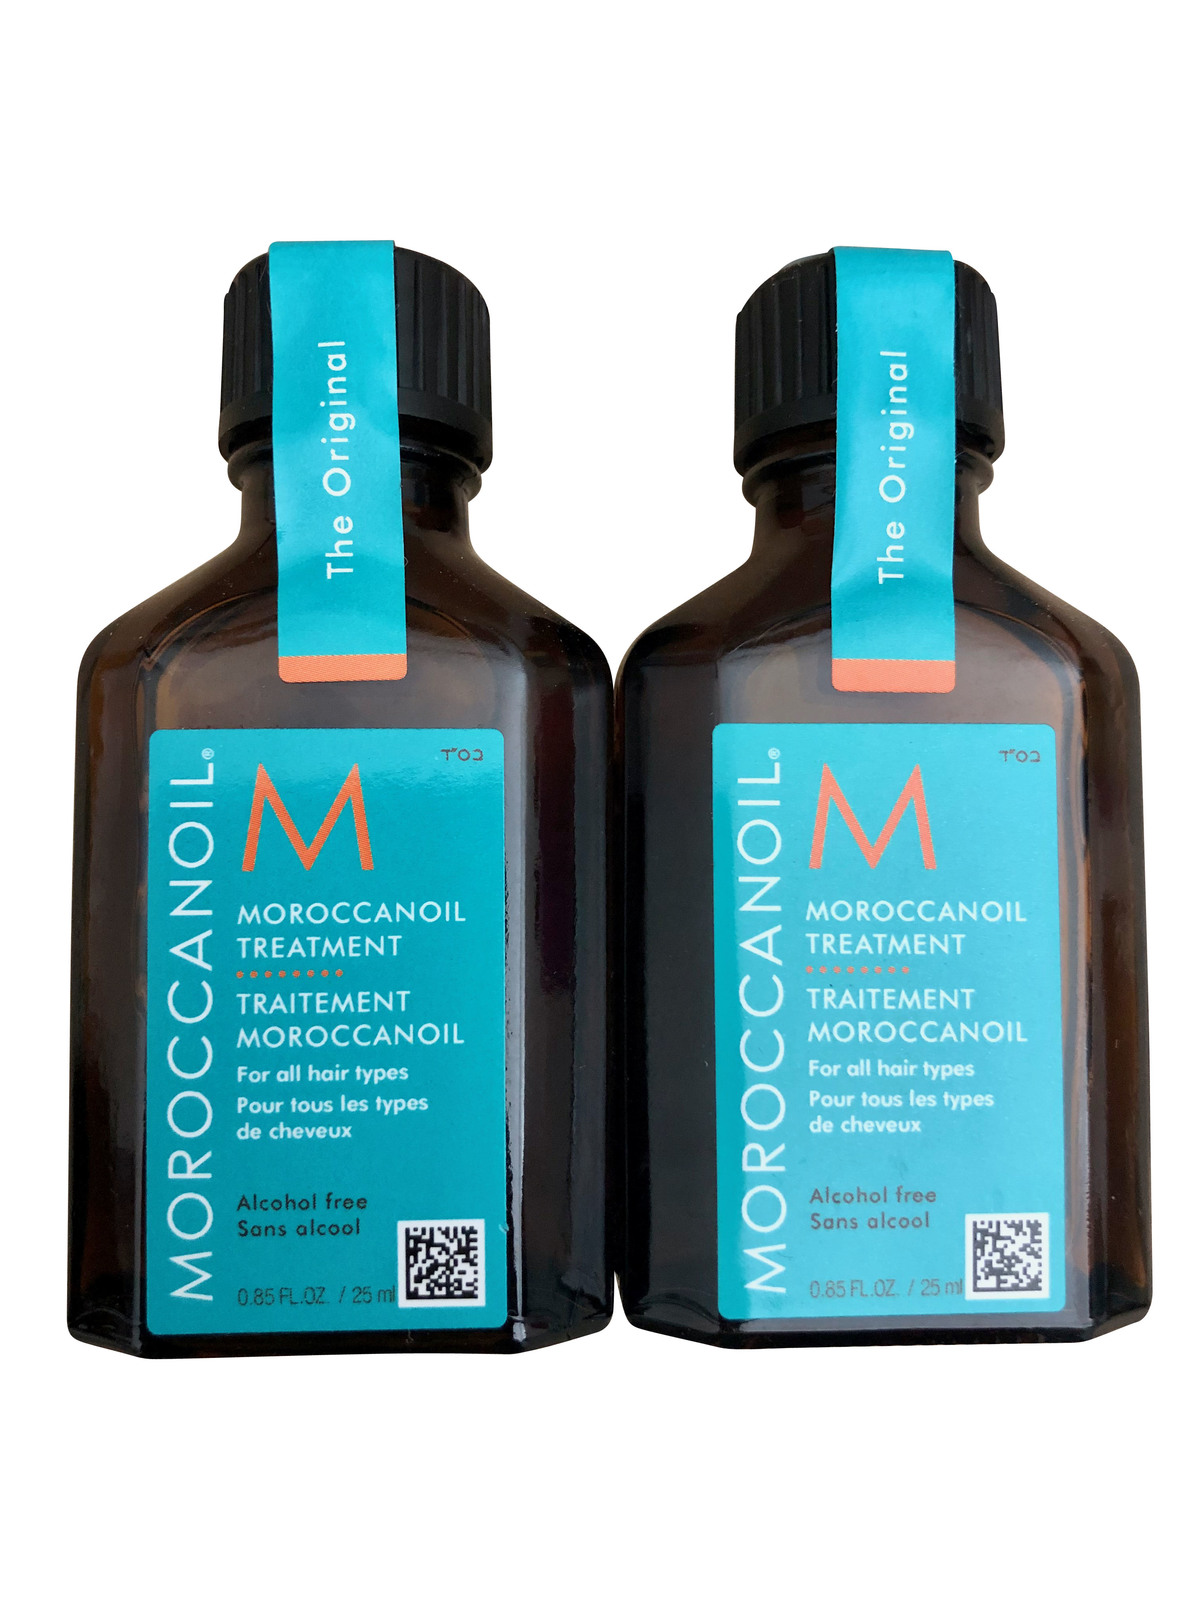 Moroccanoil Original Treatment 0.85 oz. Set of Two - $20.88